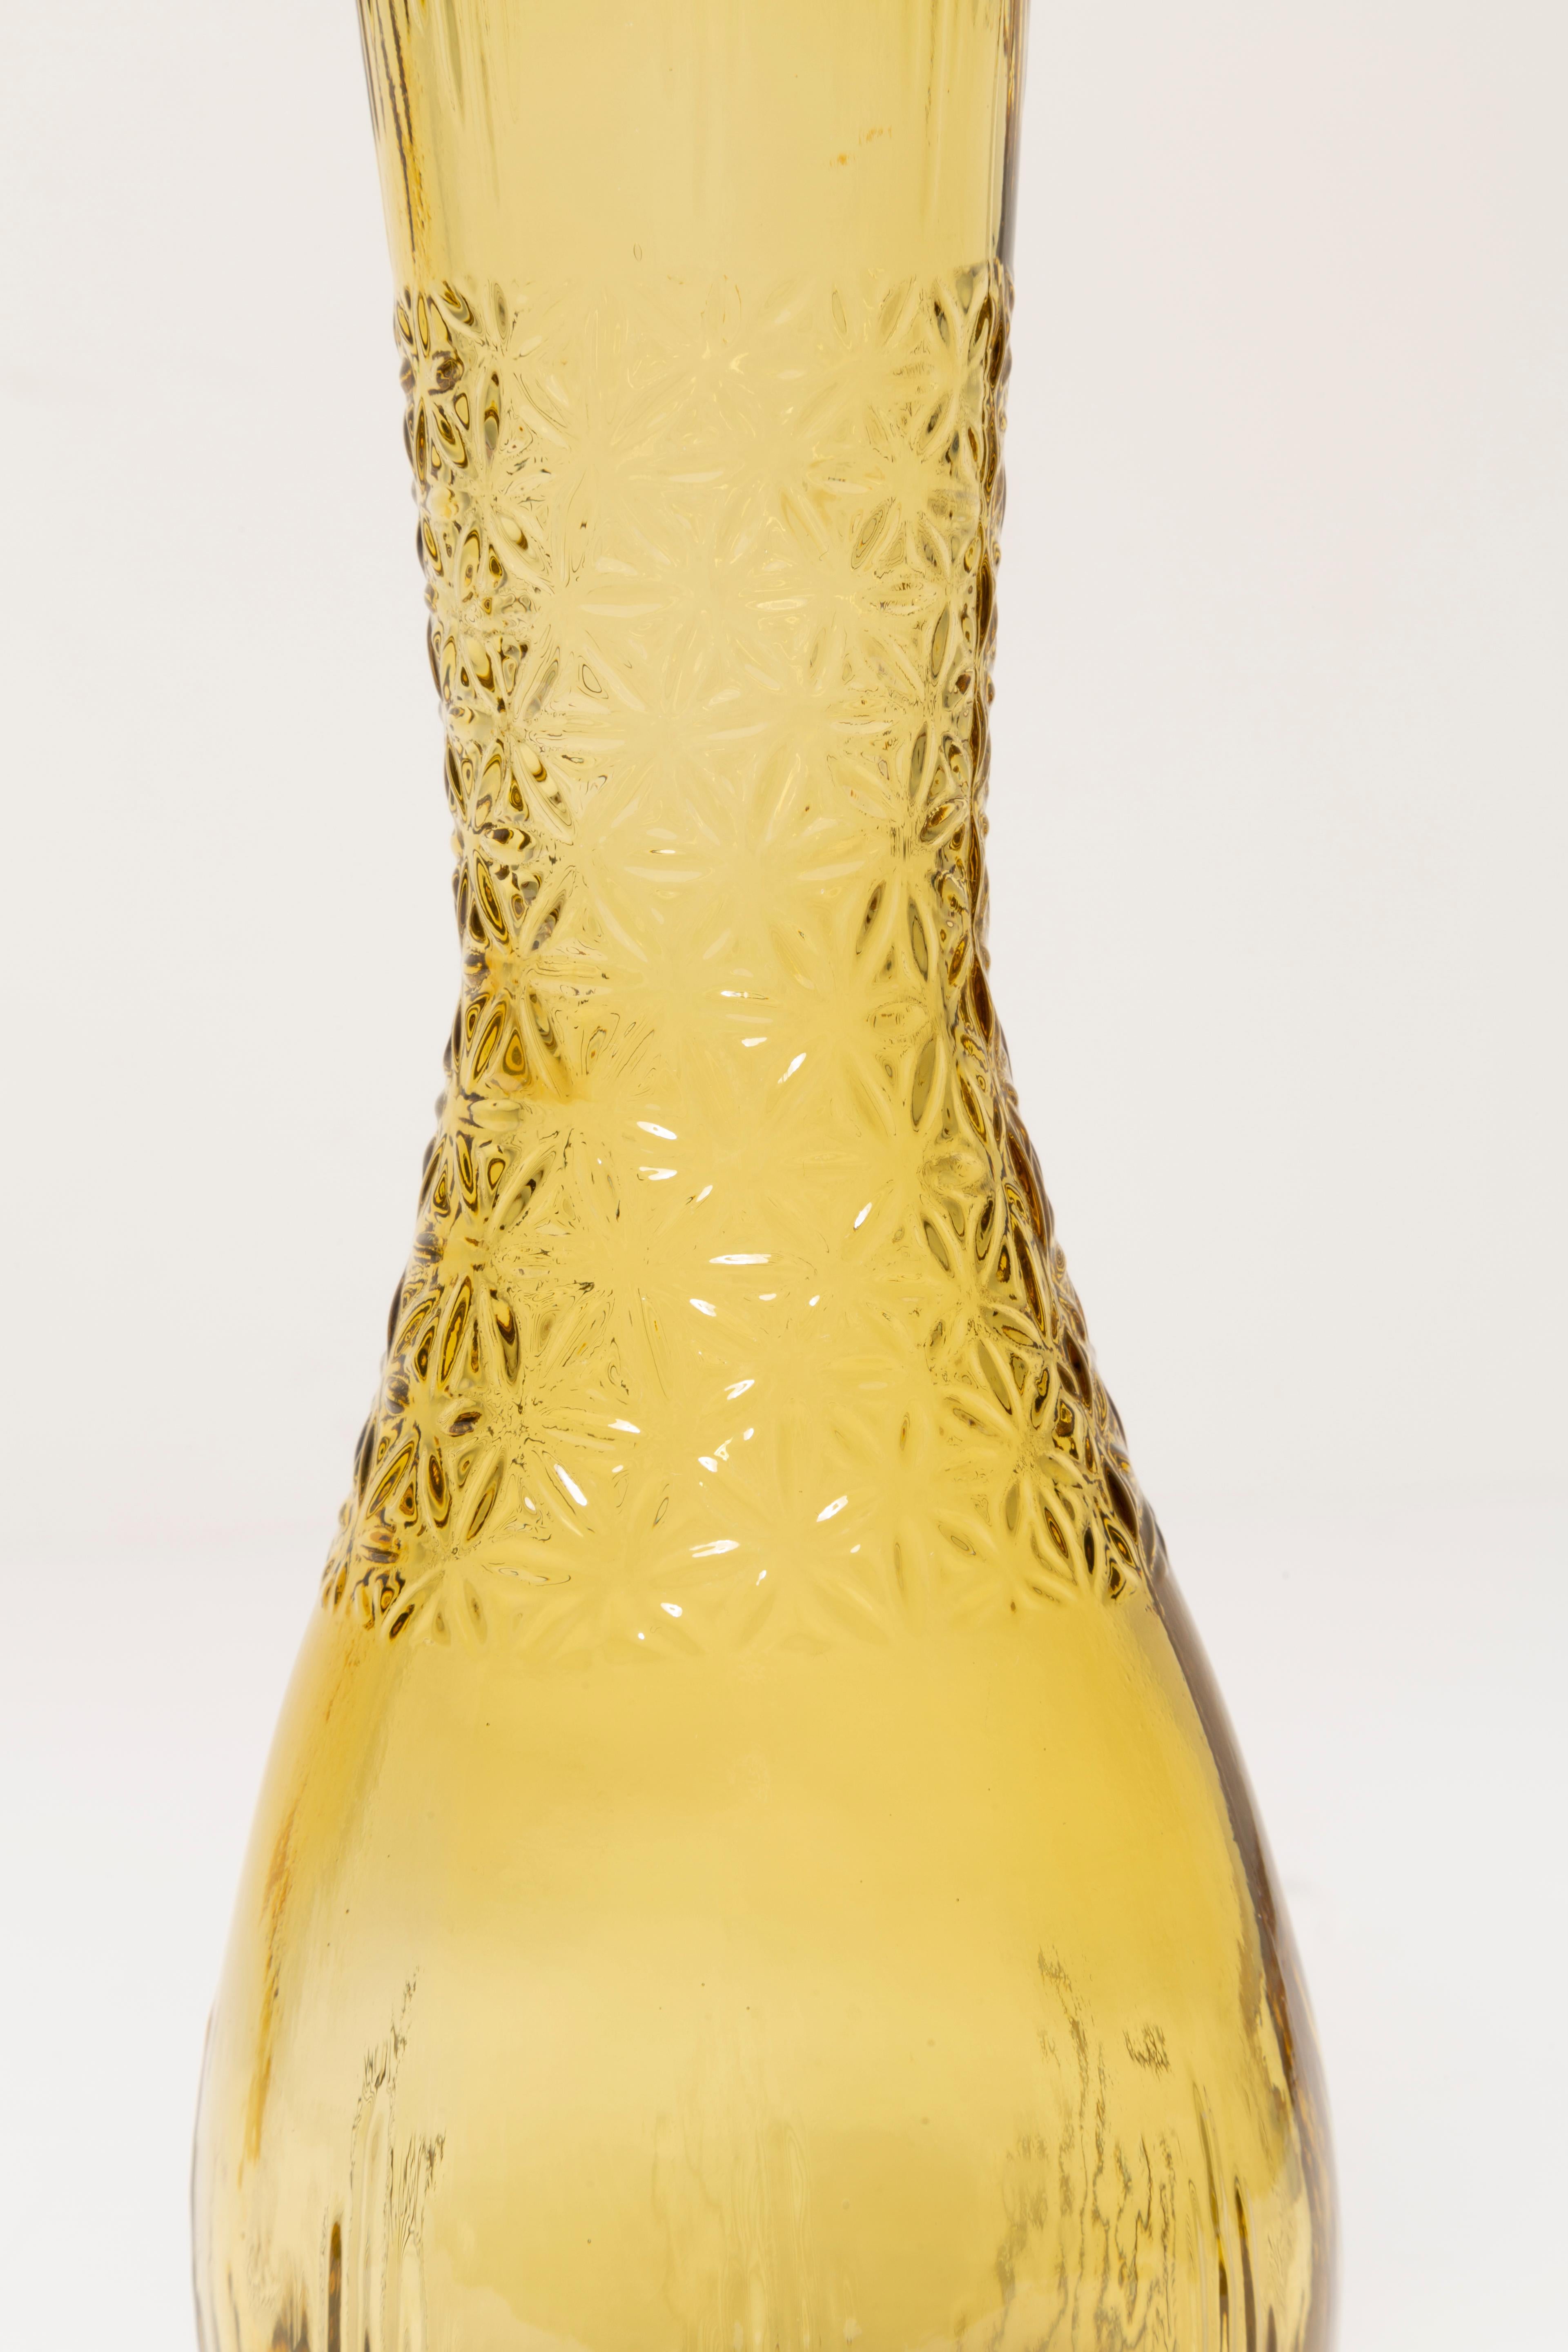 Midcentury Vintage Yellow Medium Glass Vase, Europe, 1960s For Sale 2